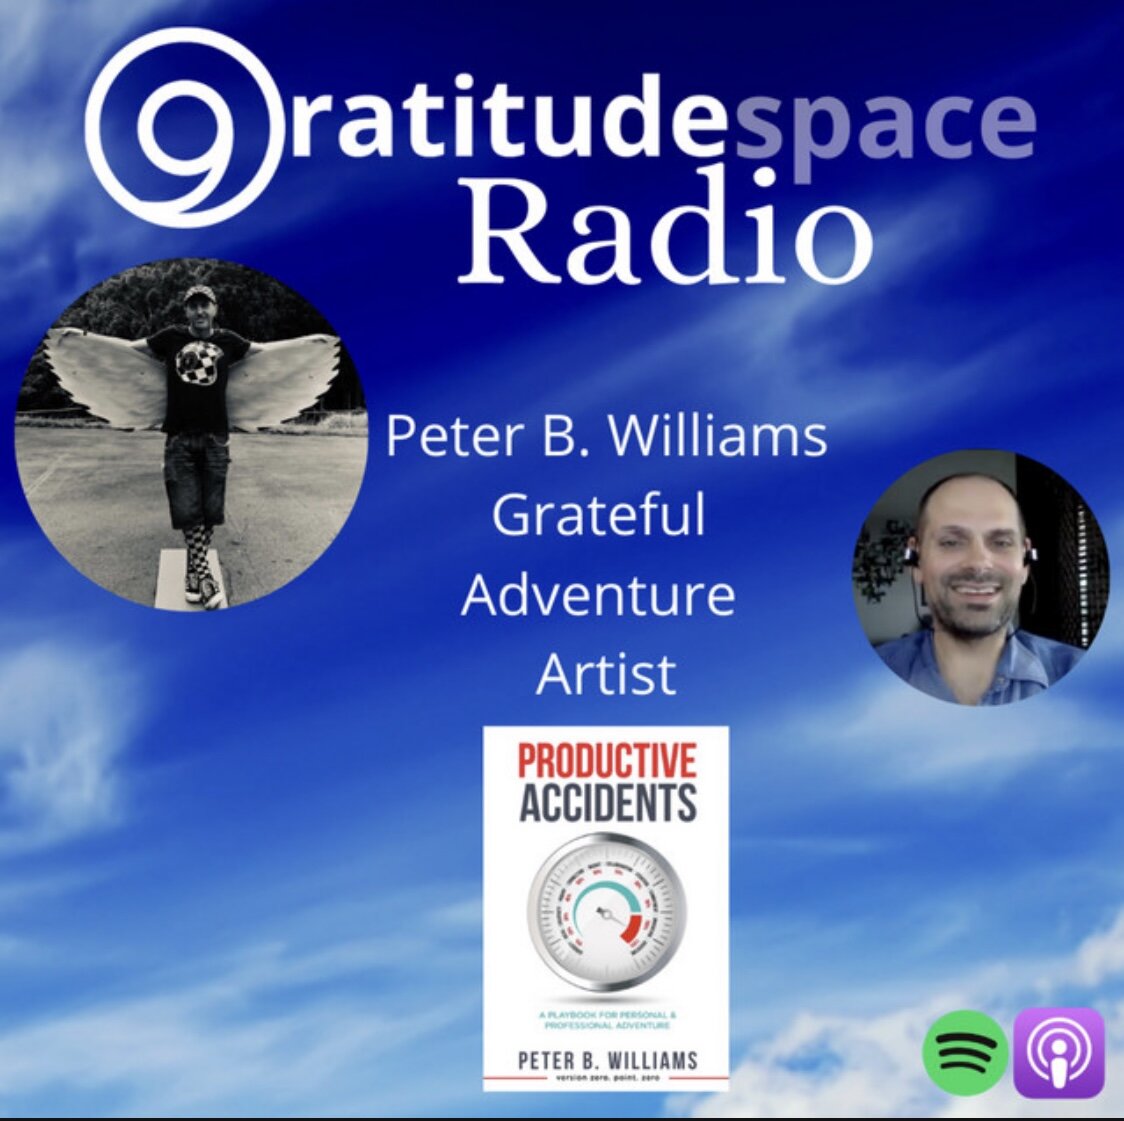 icon for website - gratitude space radio.jpg